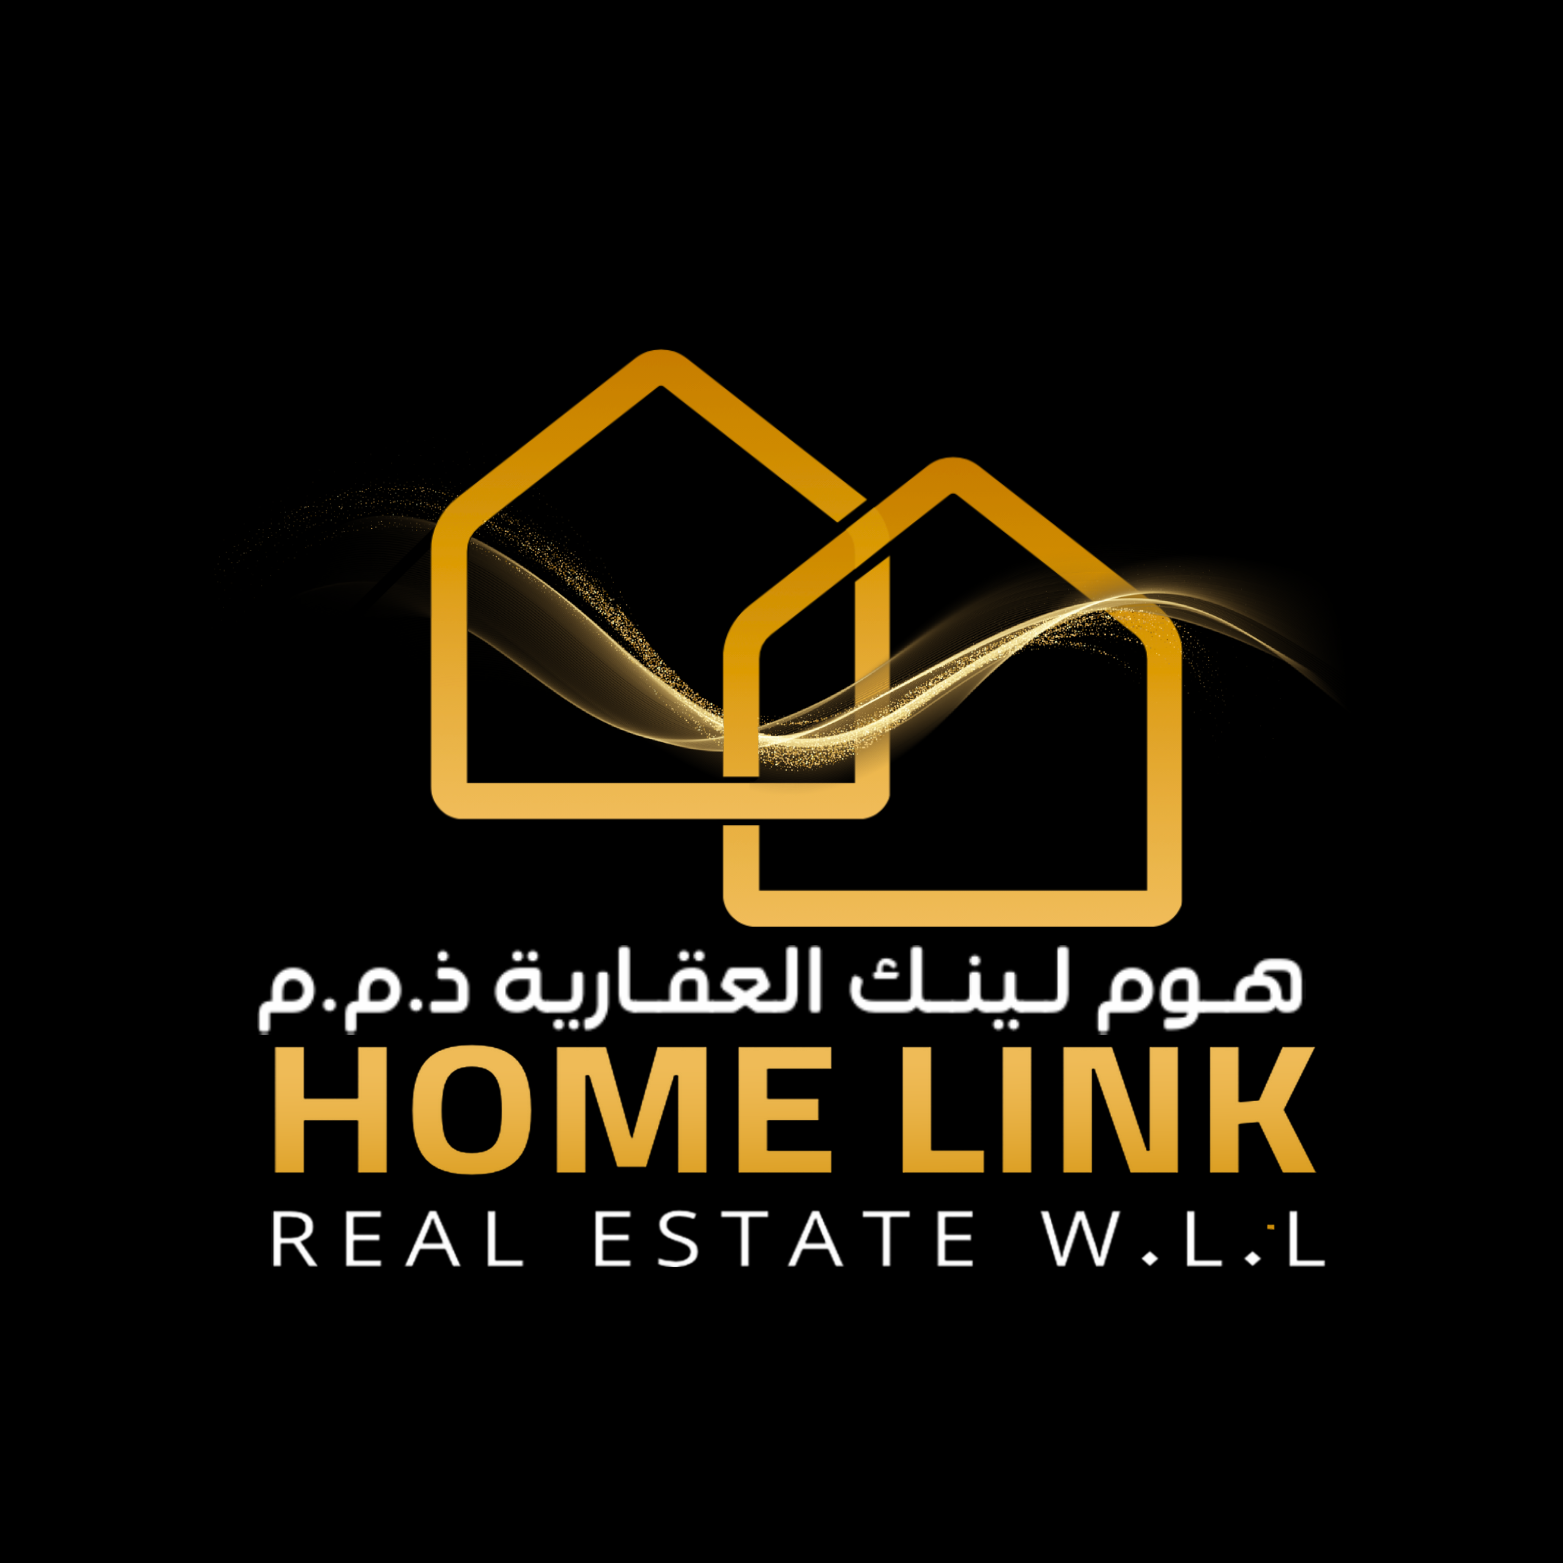 Home Link Real Estate W.L.L